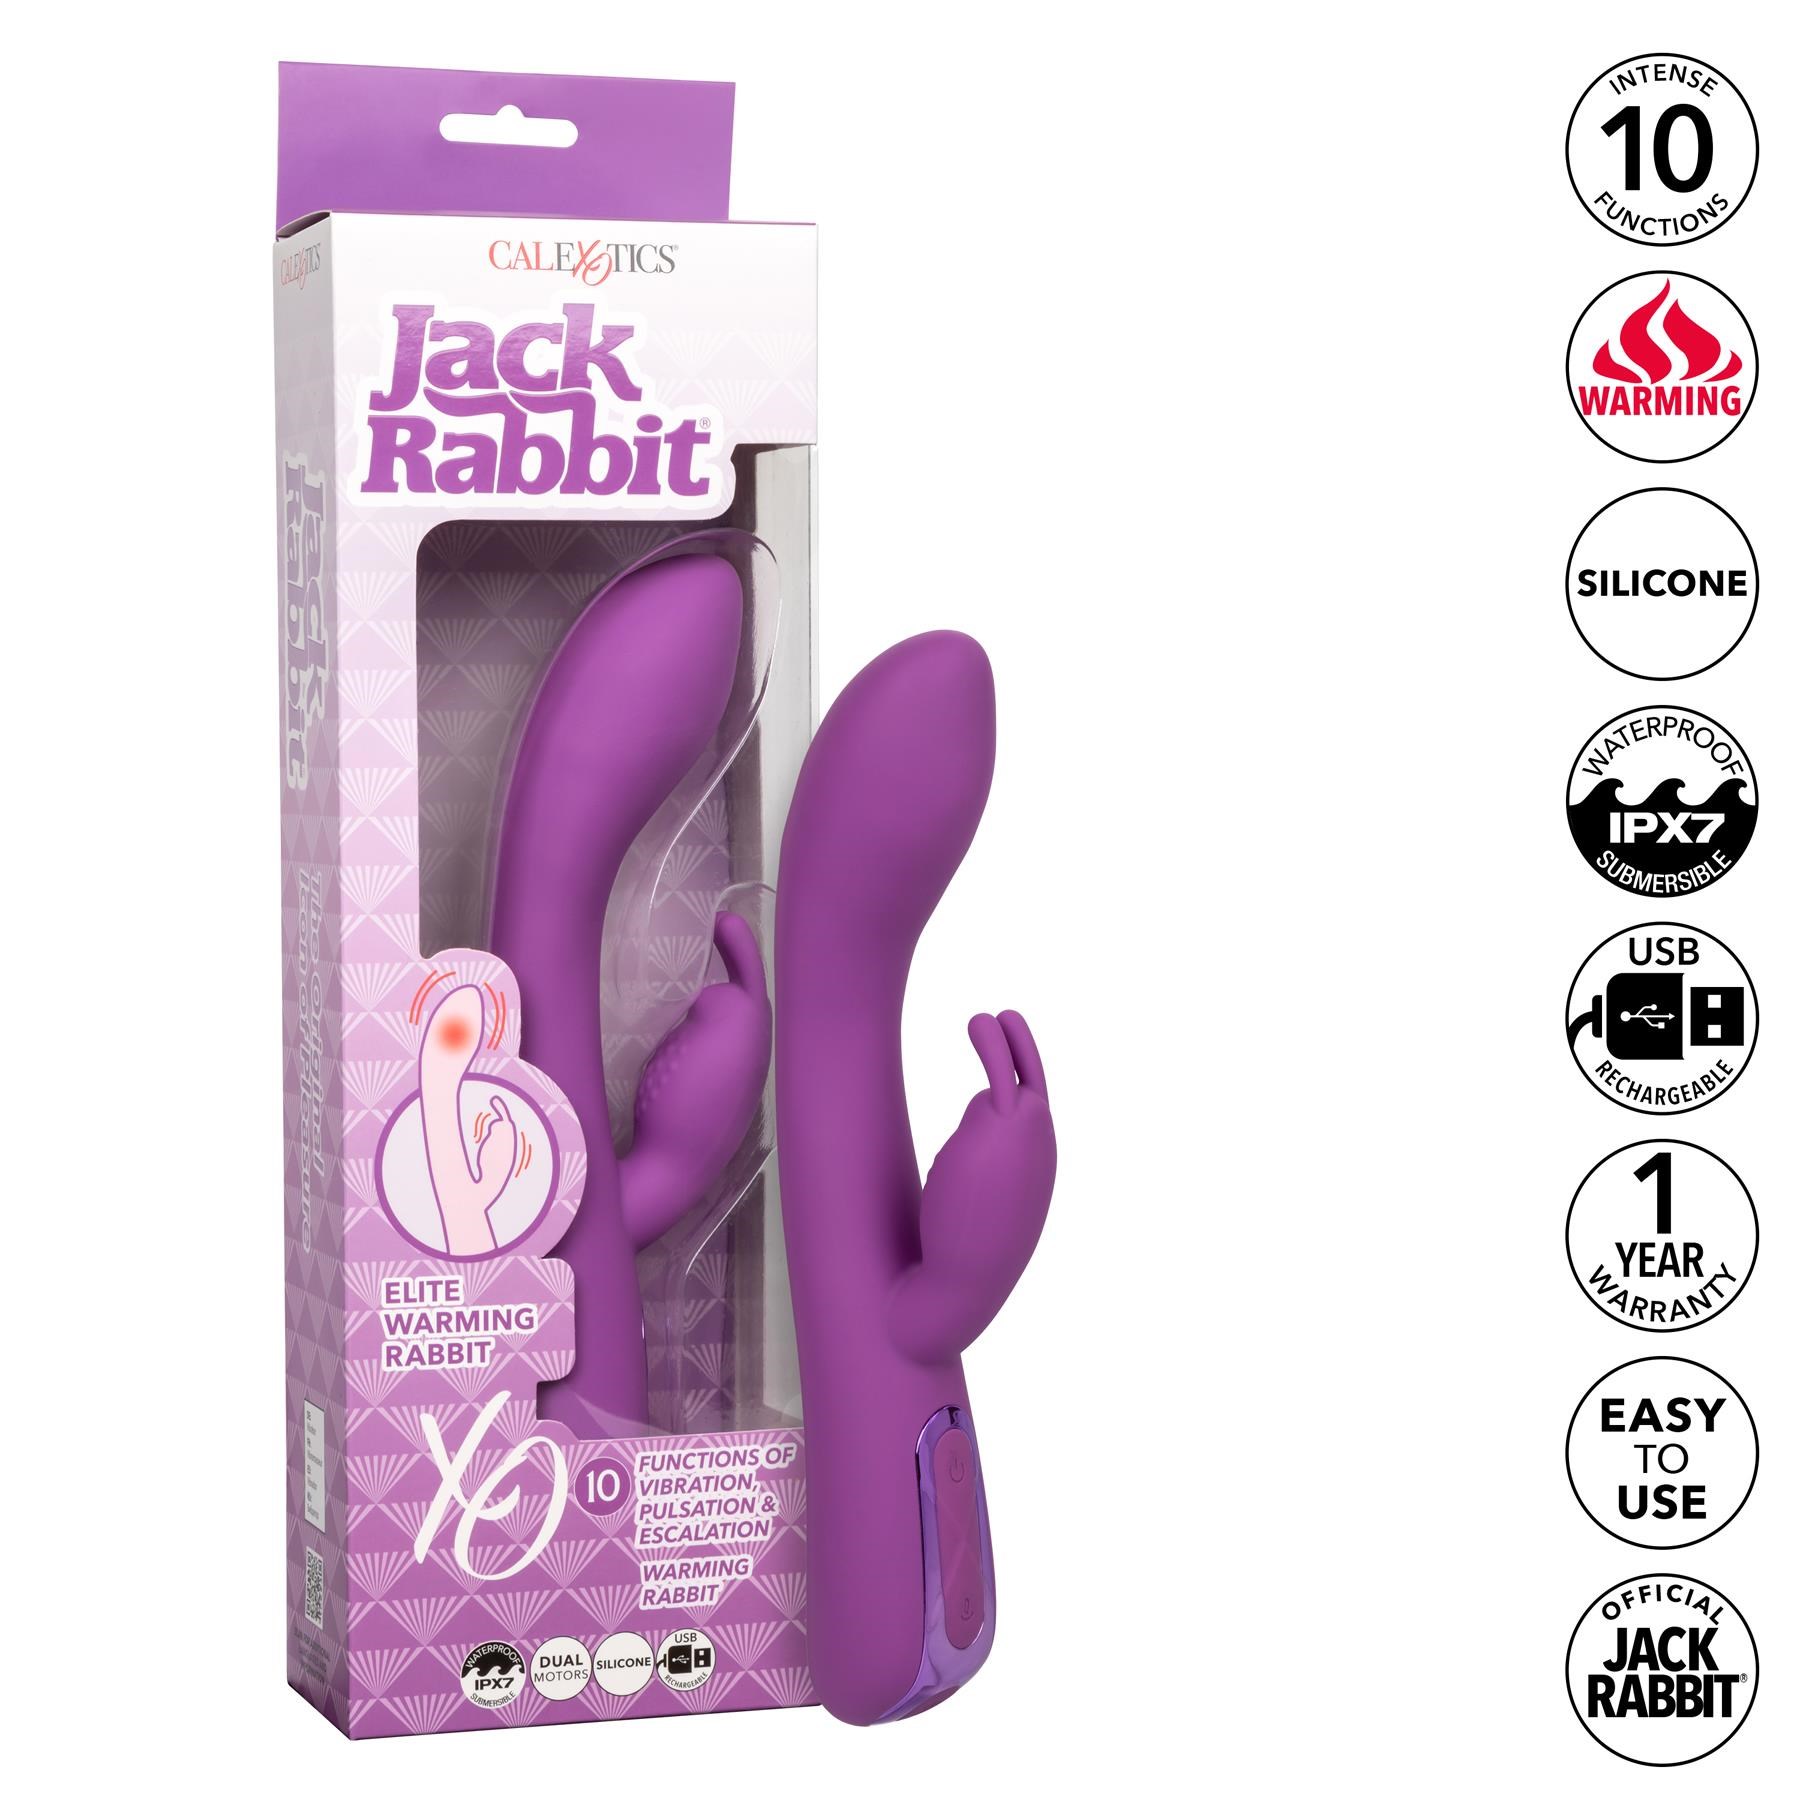 Jack Rabbit Elite Warming Rabbit - Features